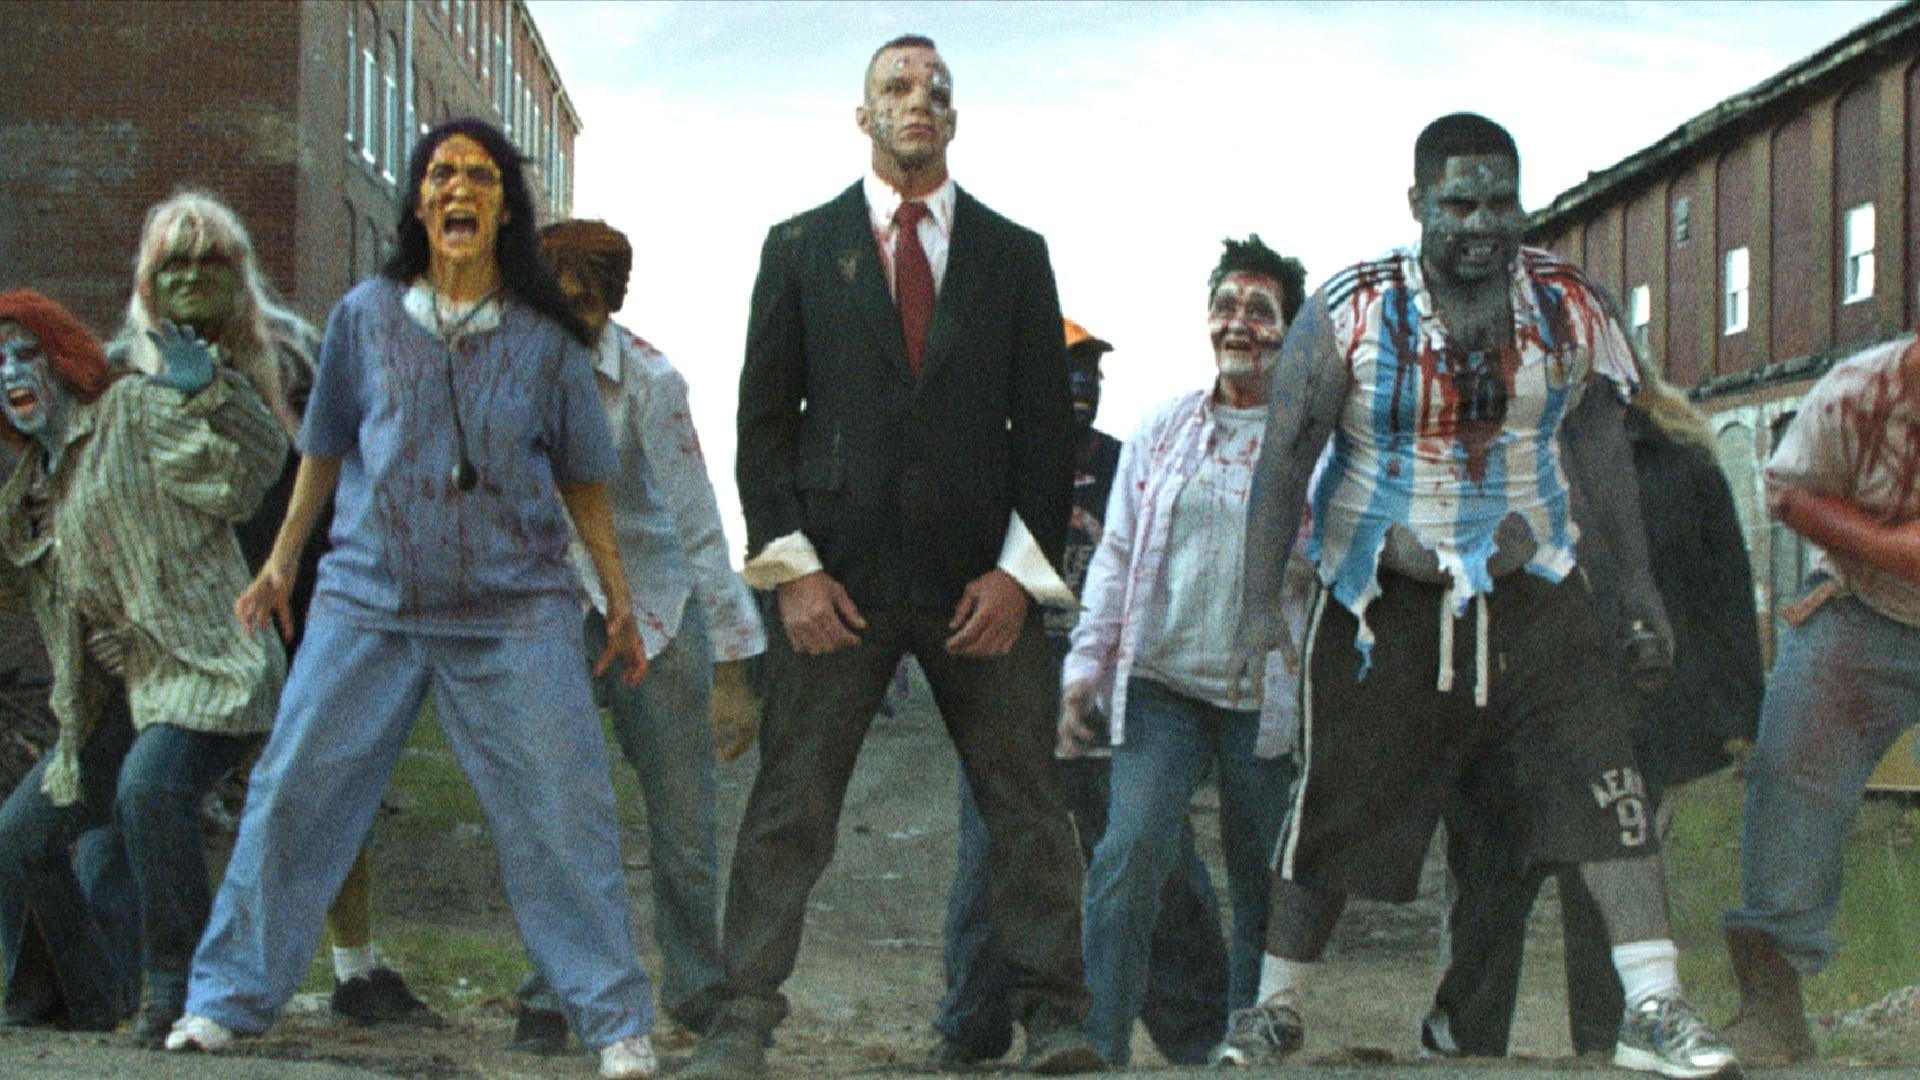 Plaga Zombie: American Invasion backdrop